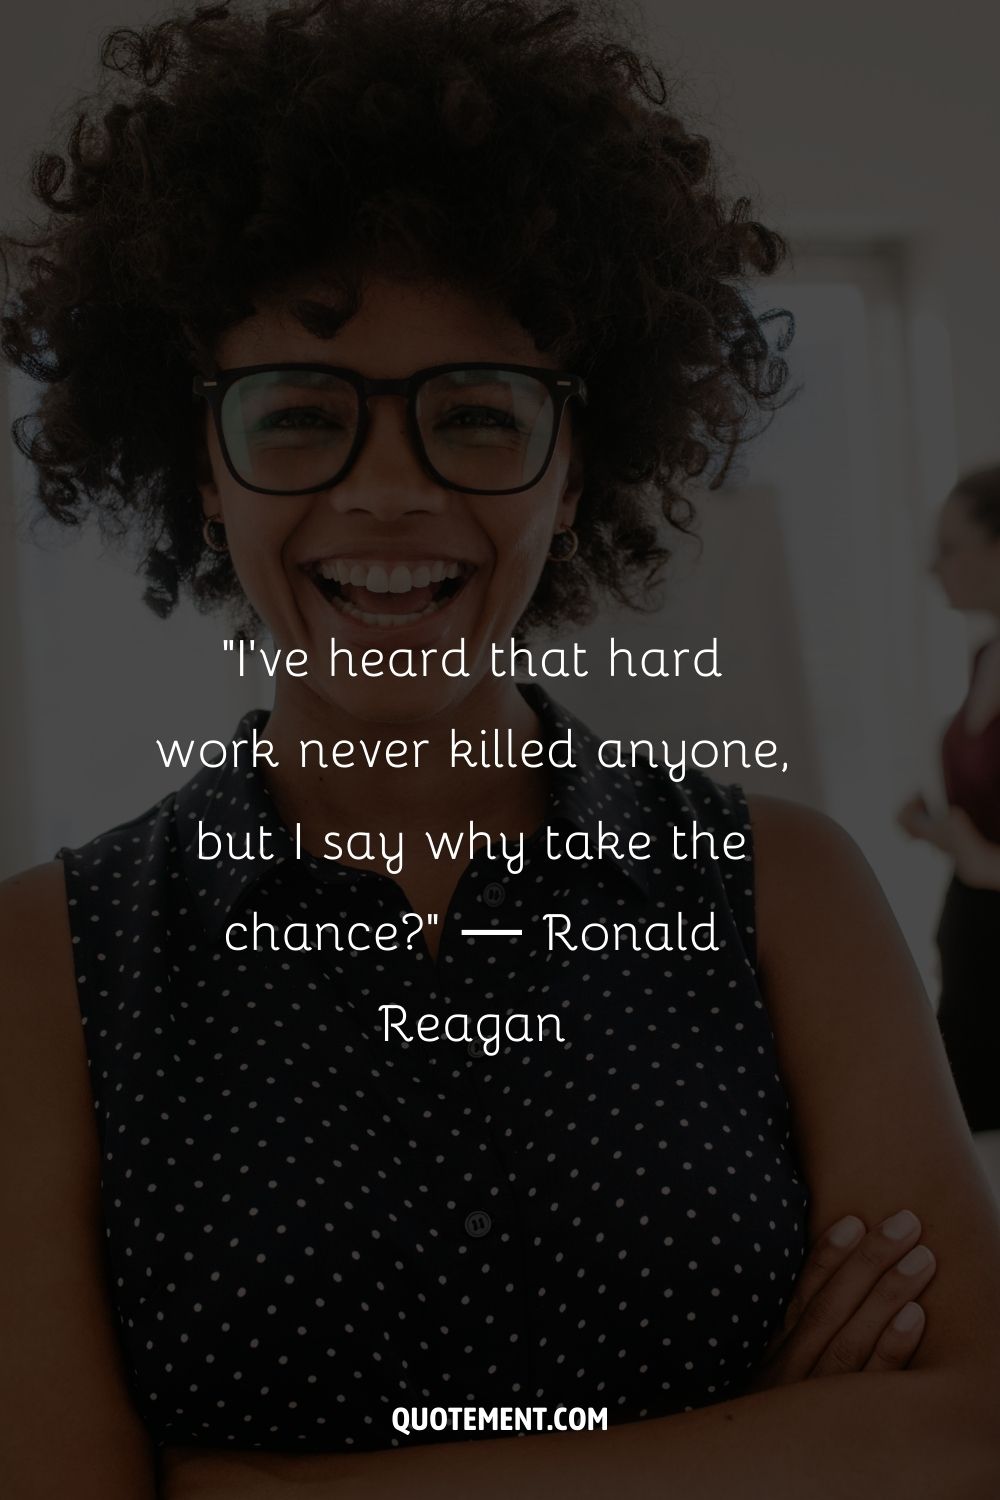 “I've heard that hard work never killed anyone, but I say why take the chance” ― Ronald Reagan